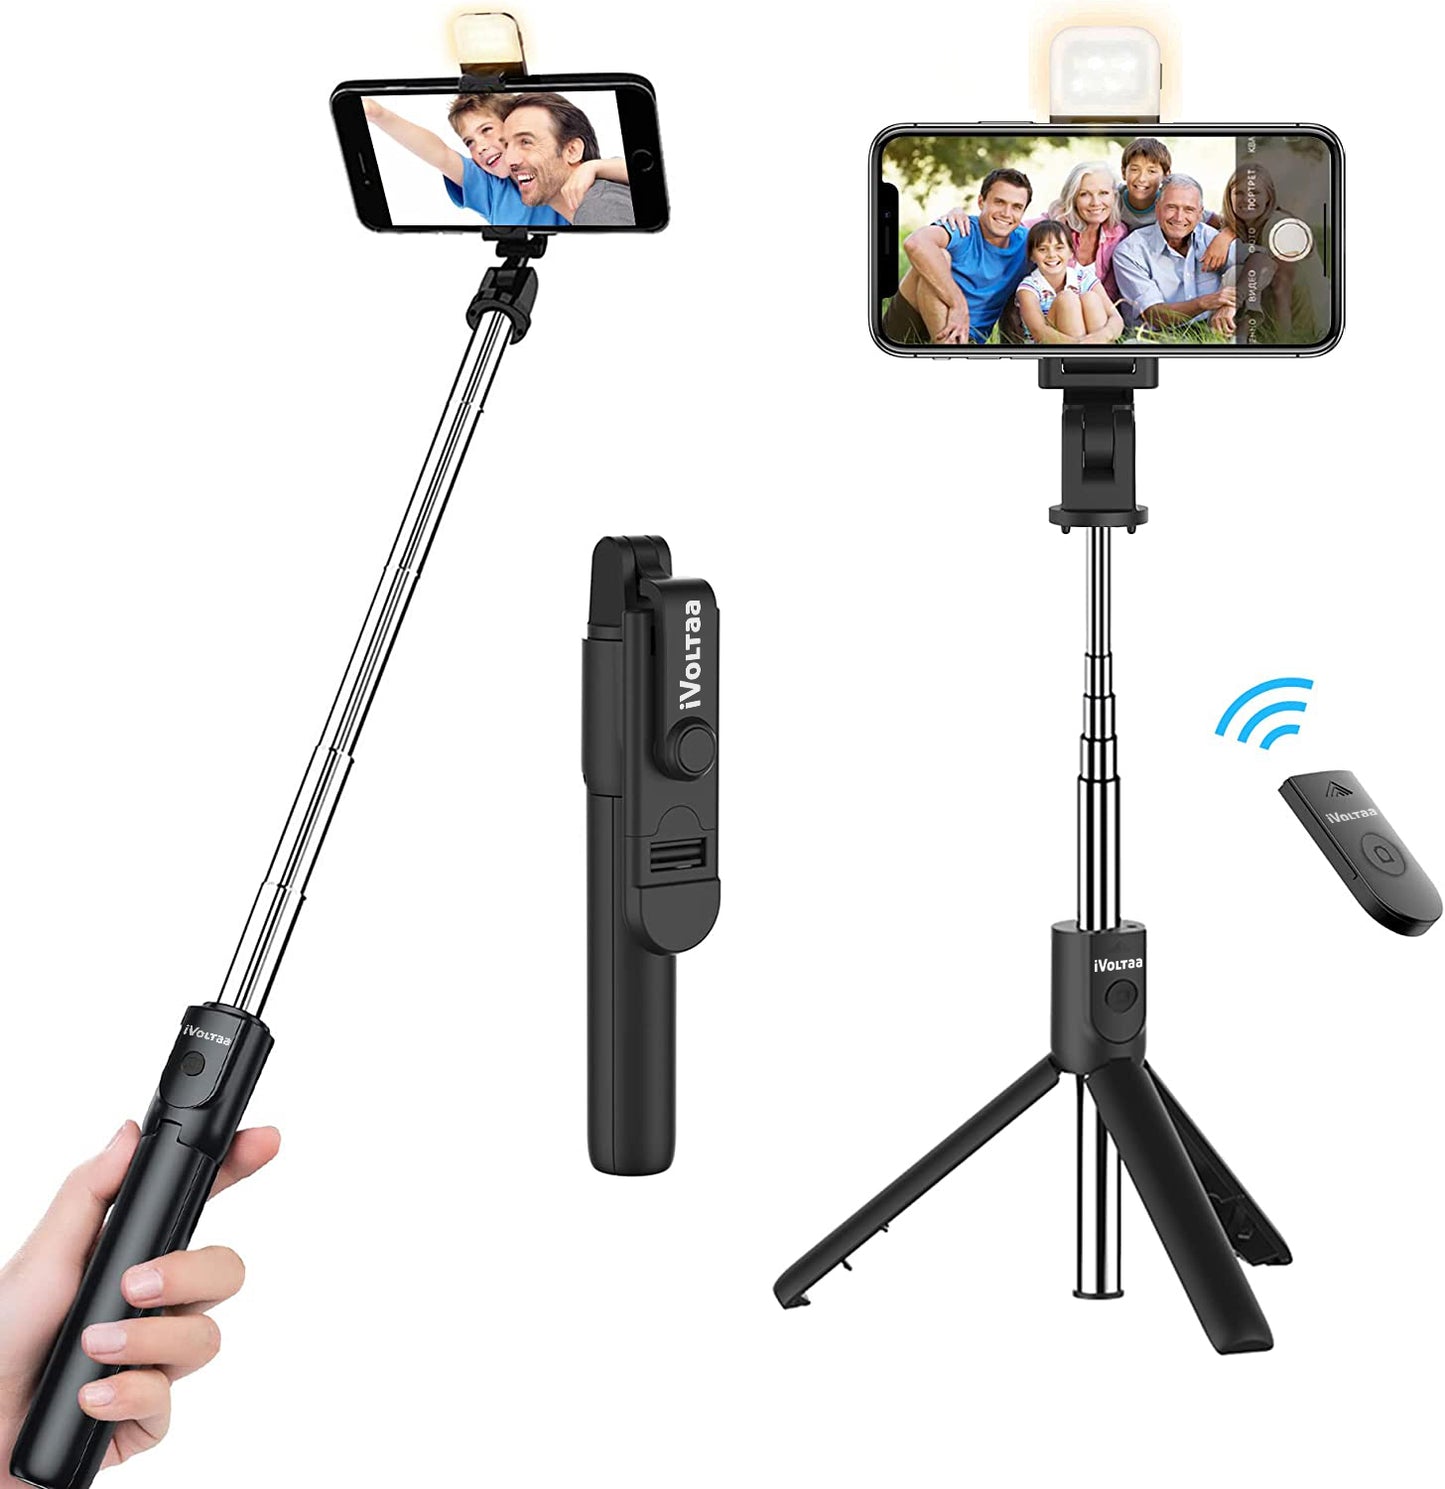 mover Enhed Moderat iVoltaa Selfie Stick Tripod with Detachable Wireless Remote, Extendabl